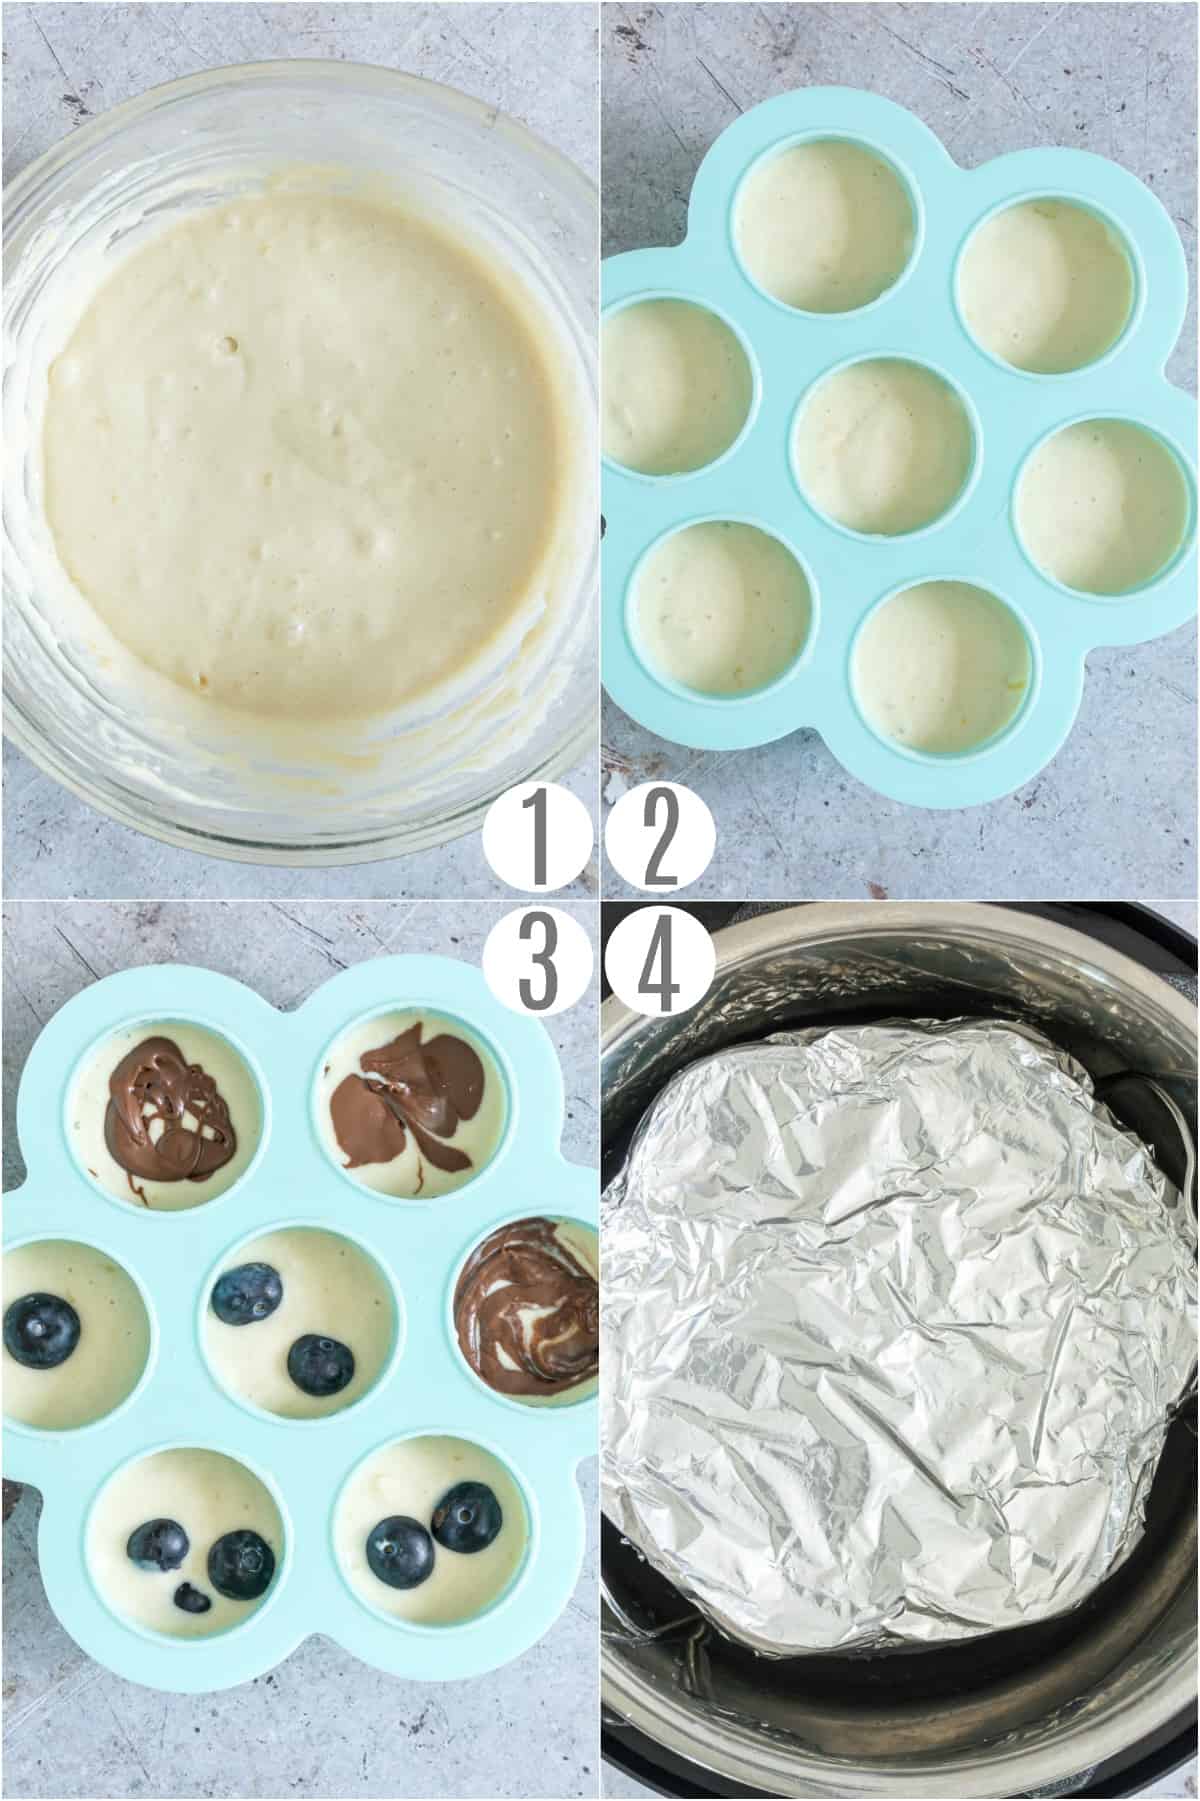 https://www.shugarysweets.com/wp-content/uploads/2020/07/instant-pot-pancake-bites-1.jpg